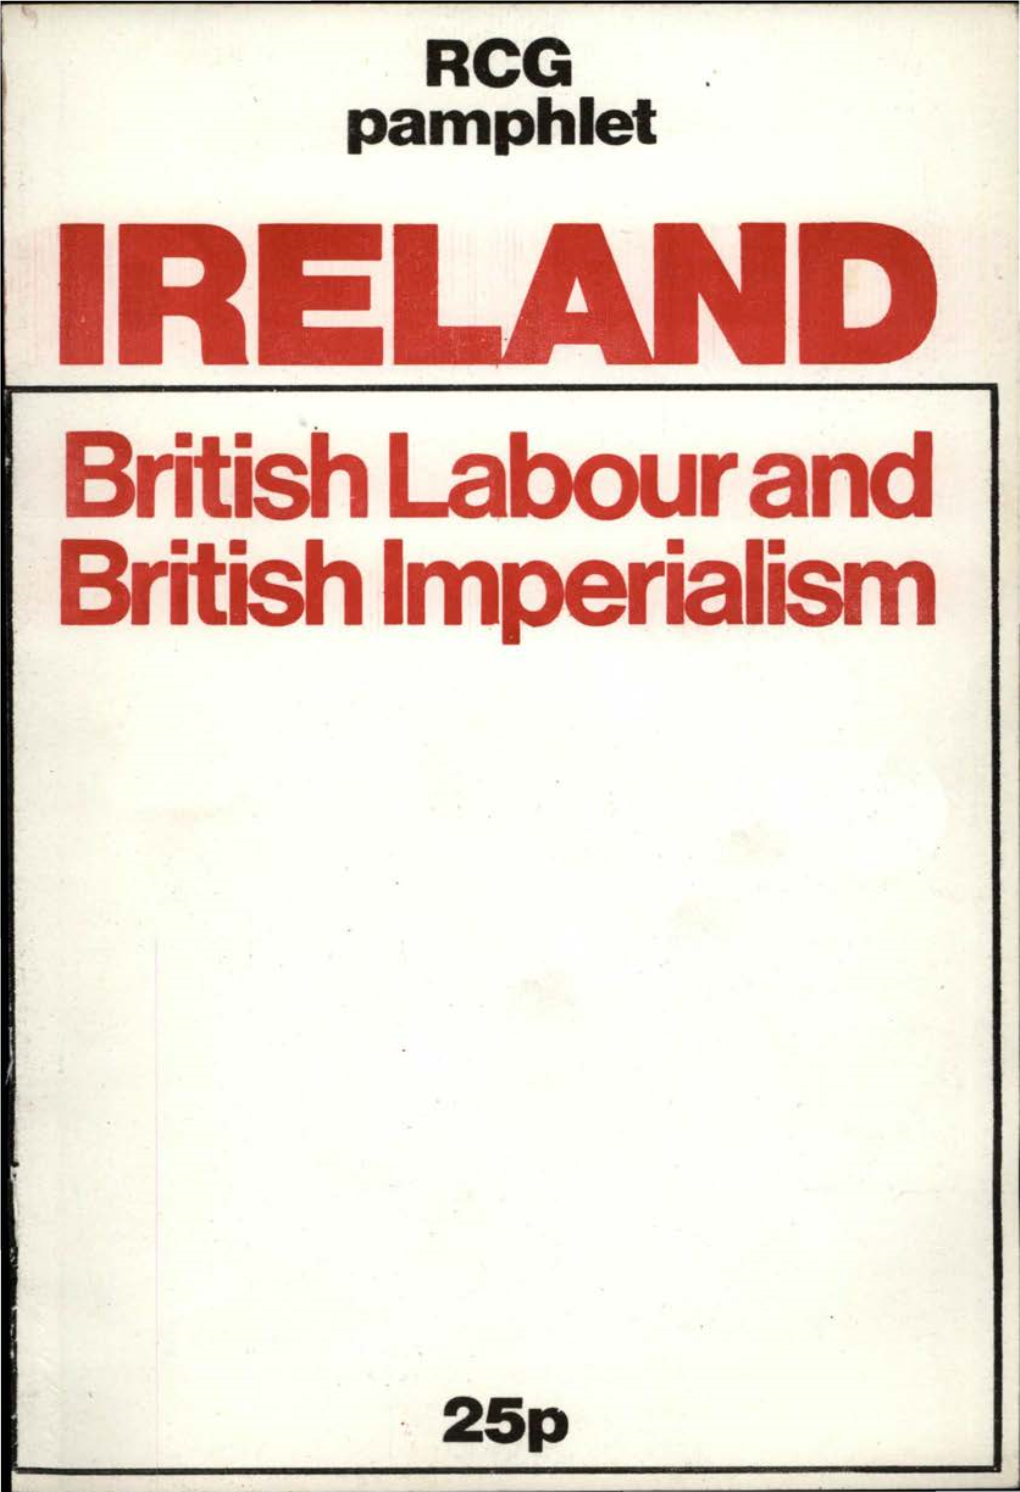 IRELAND: British Labour and British Imperialism